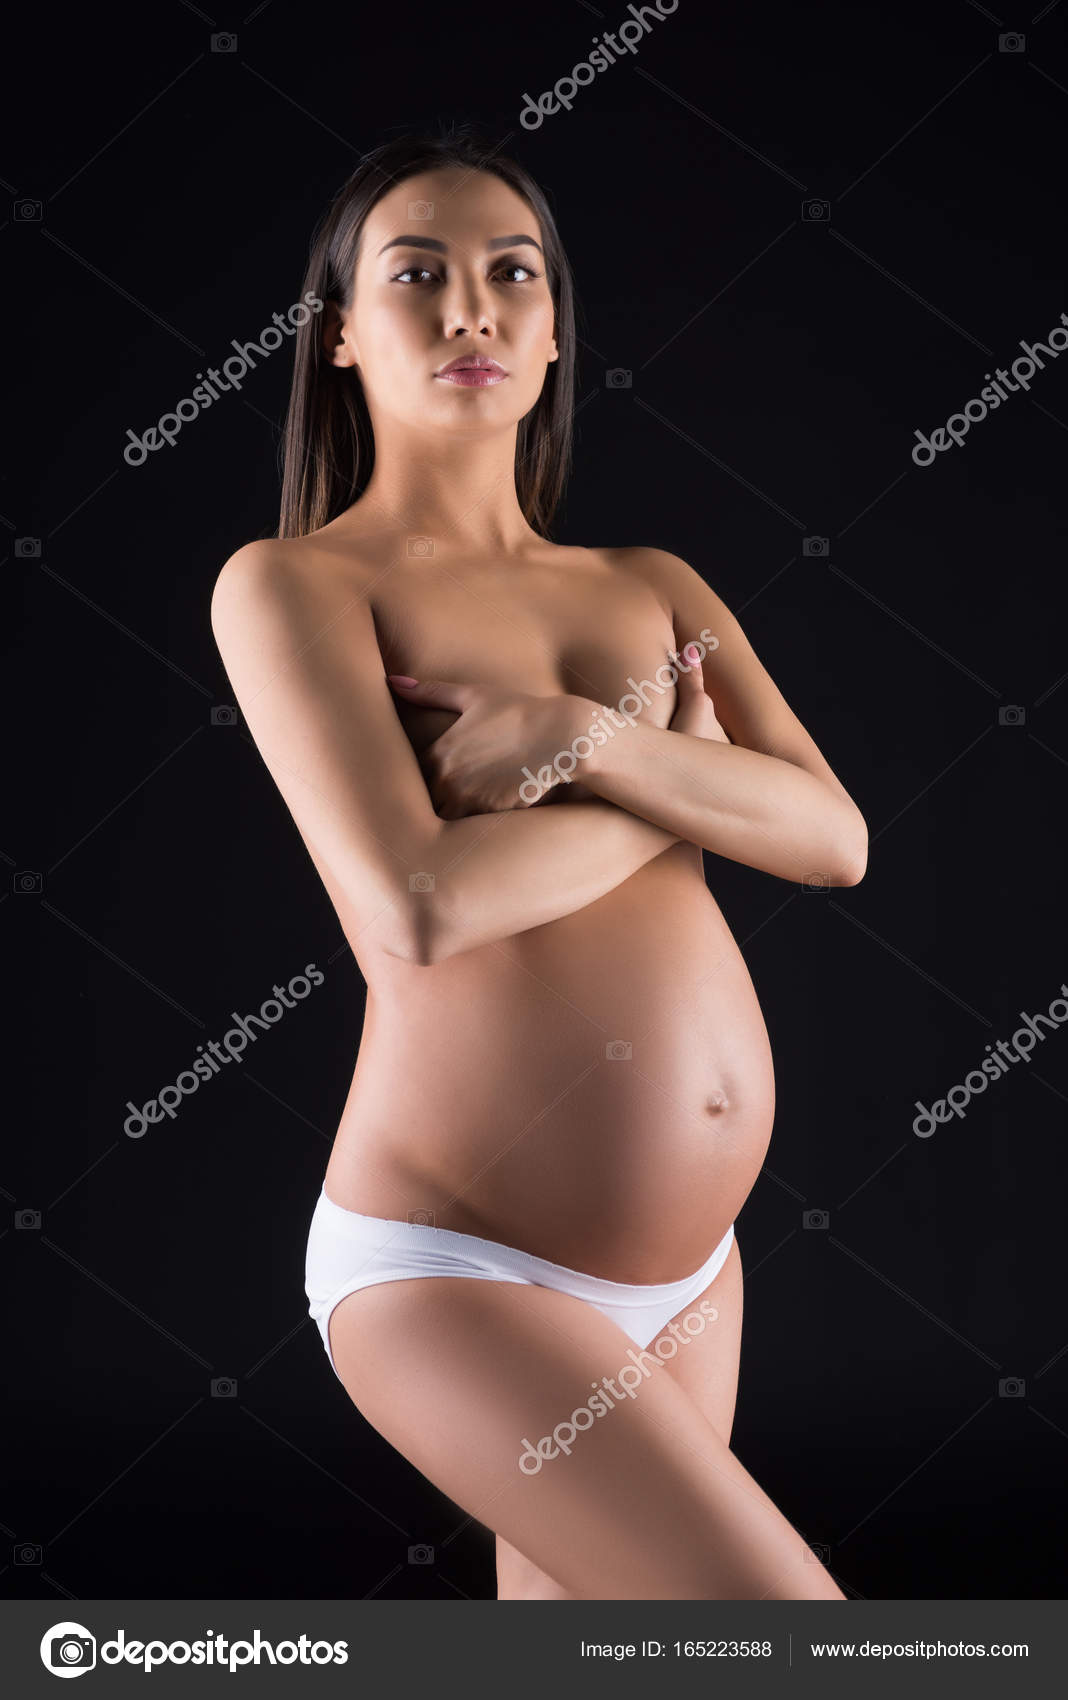 Pregnant Nude Asian Women Telegraph